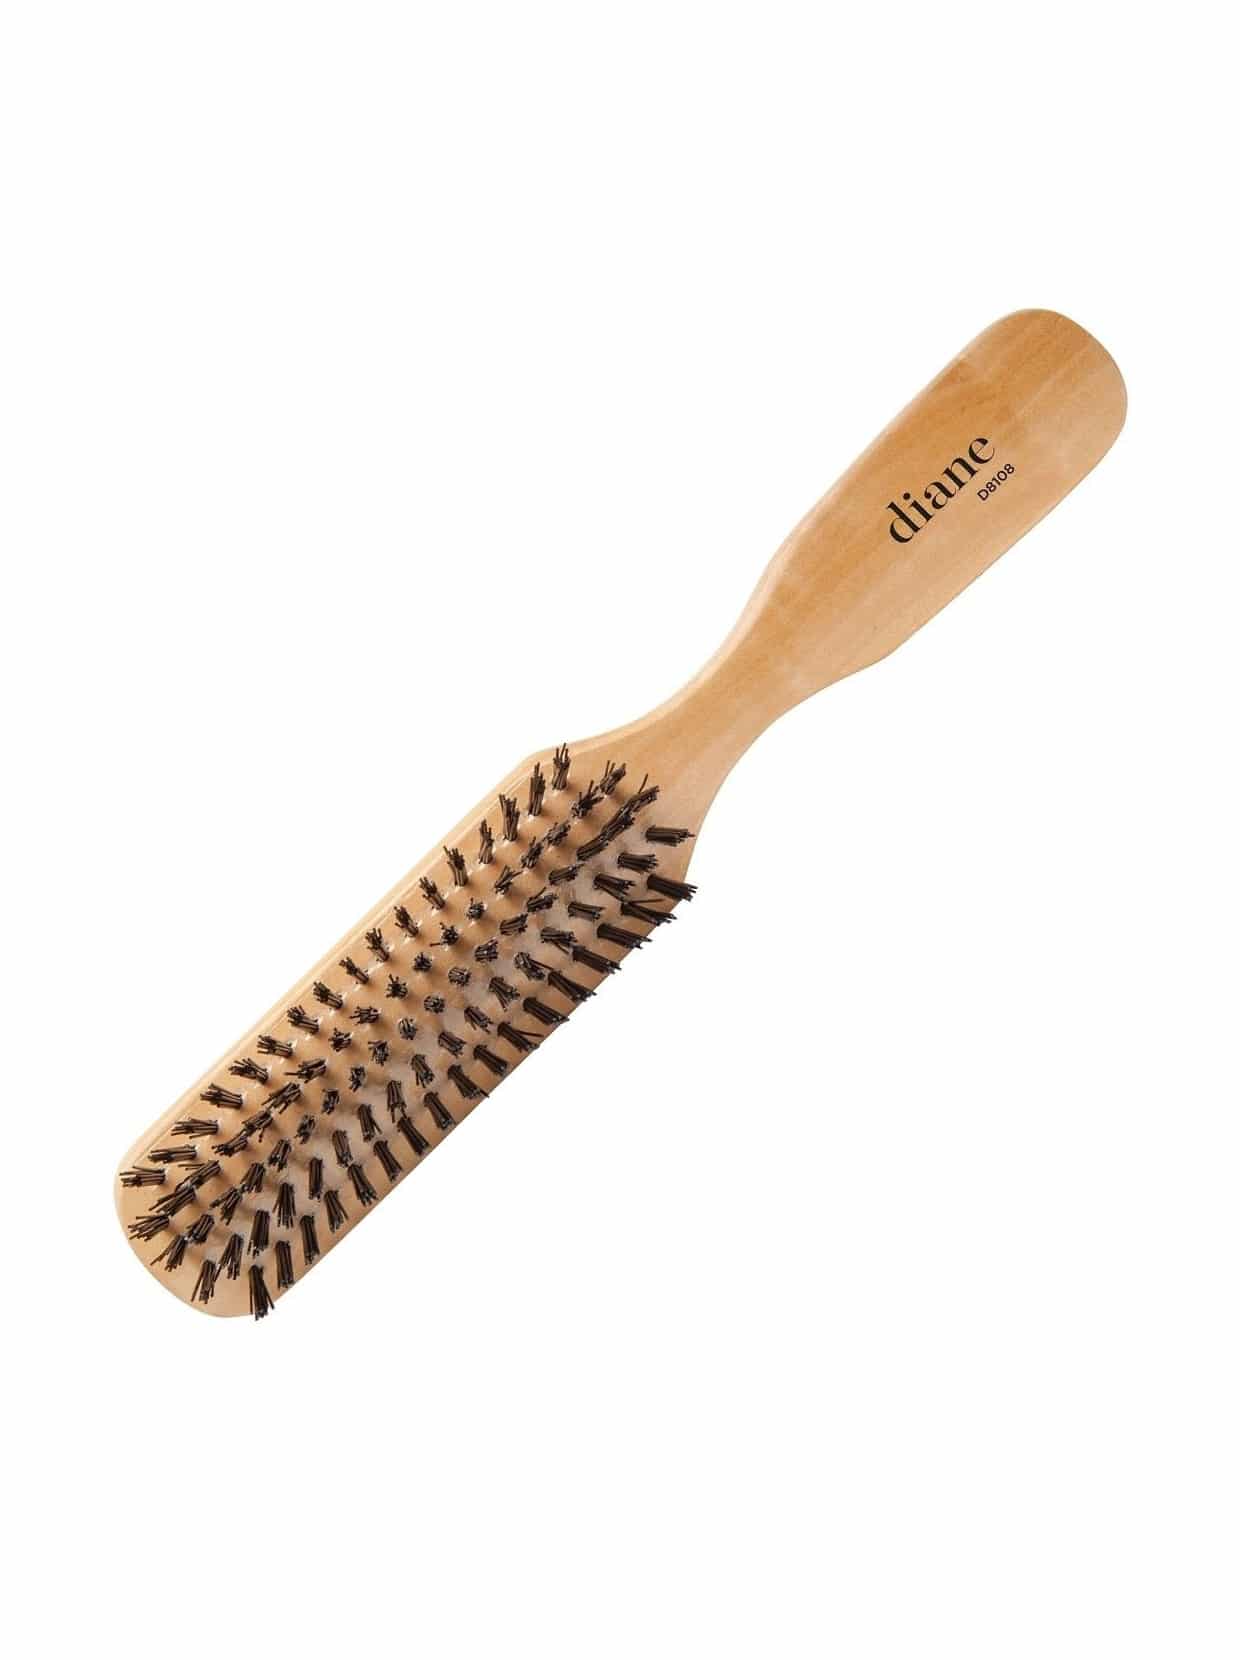 Scalpmaster Nylon Bristle Brush Nylon Bristle Salon Brush Hair